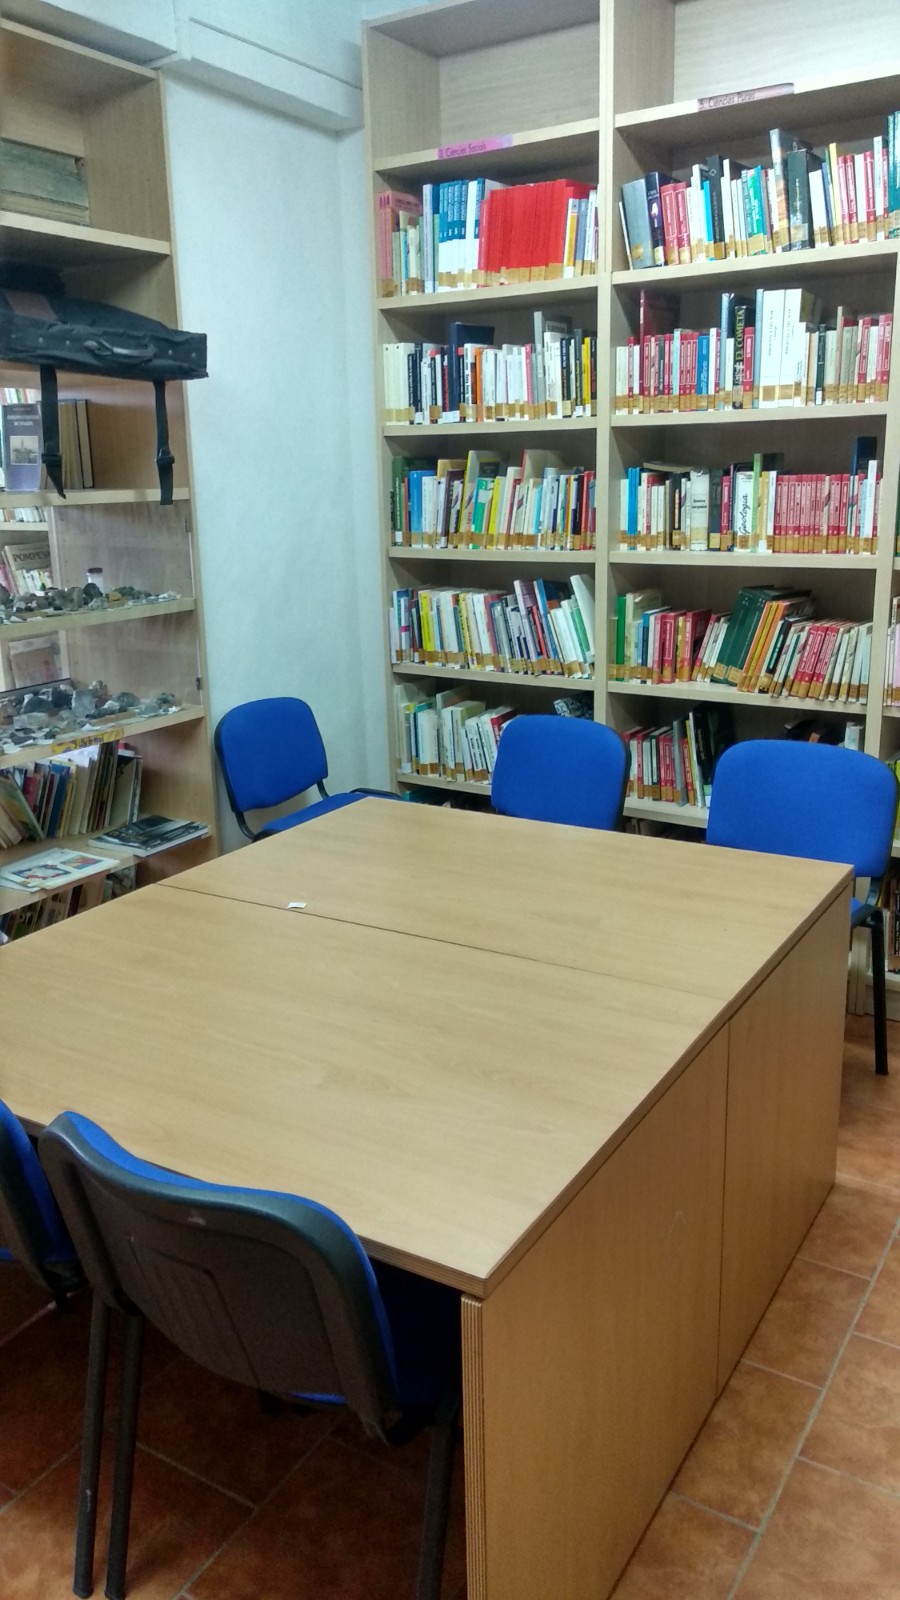 Agència de Lectura - Biblioteca municipal d'Agres